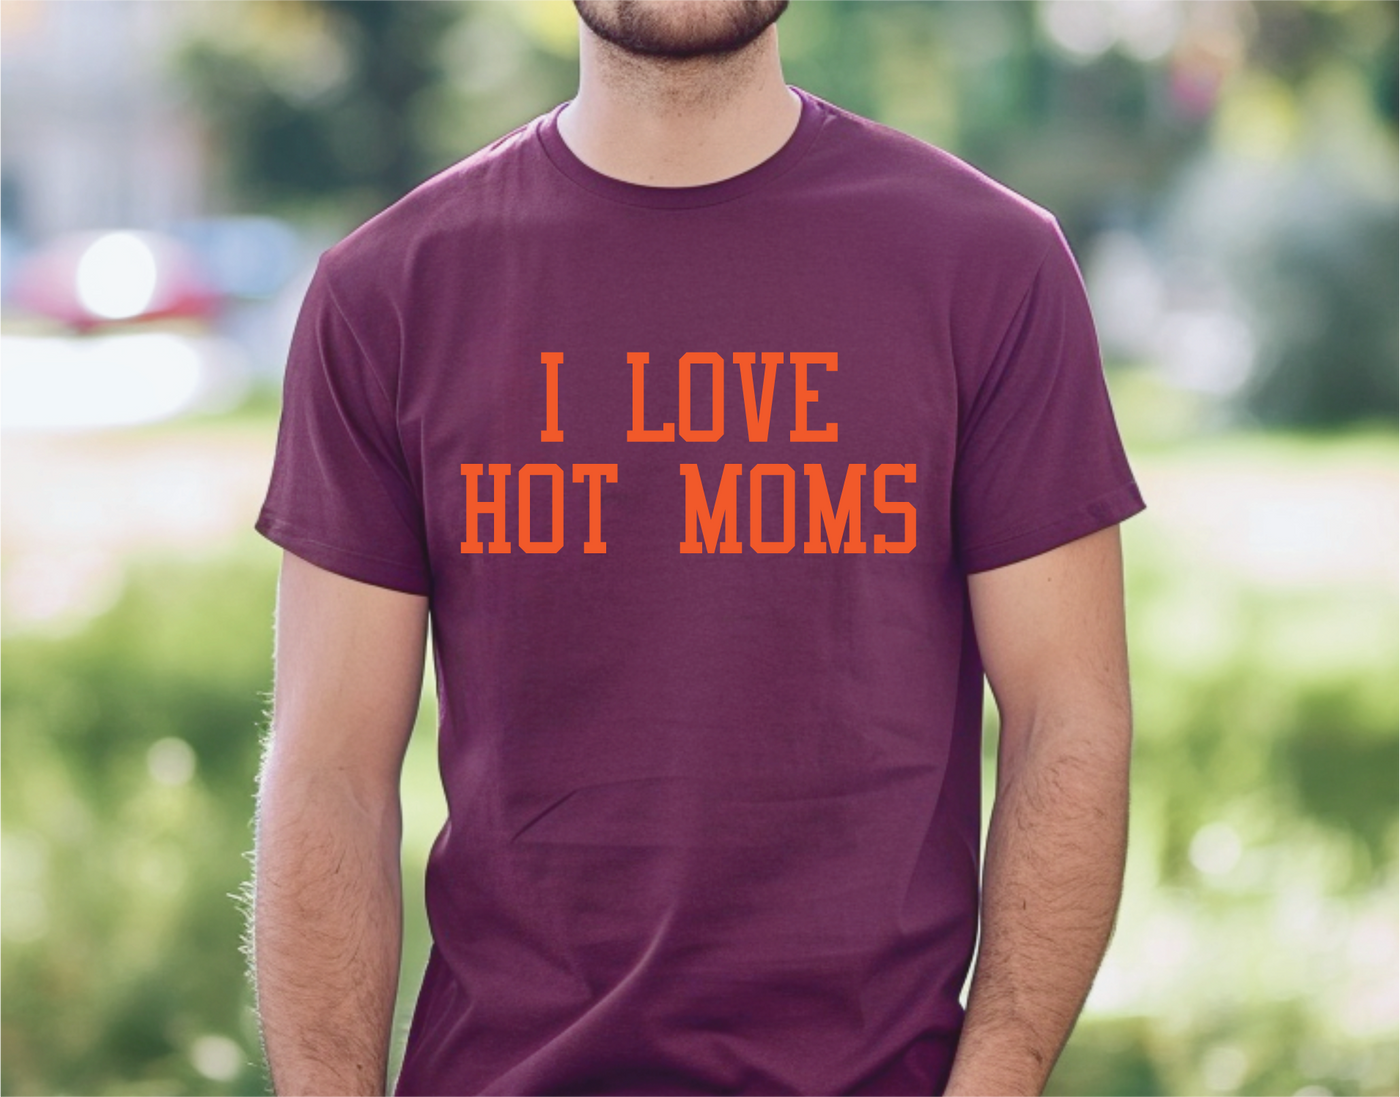 I LOVE HOT MOMS T-SHIRT